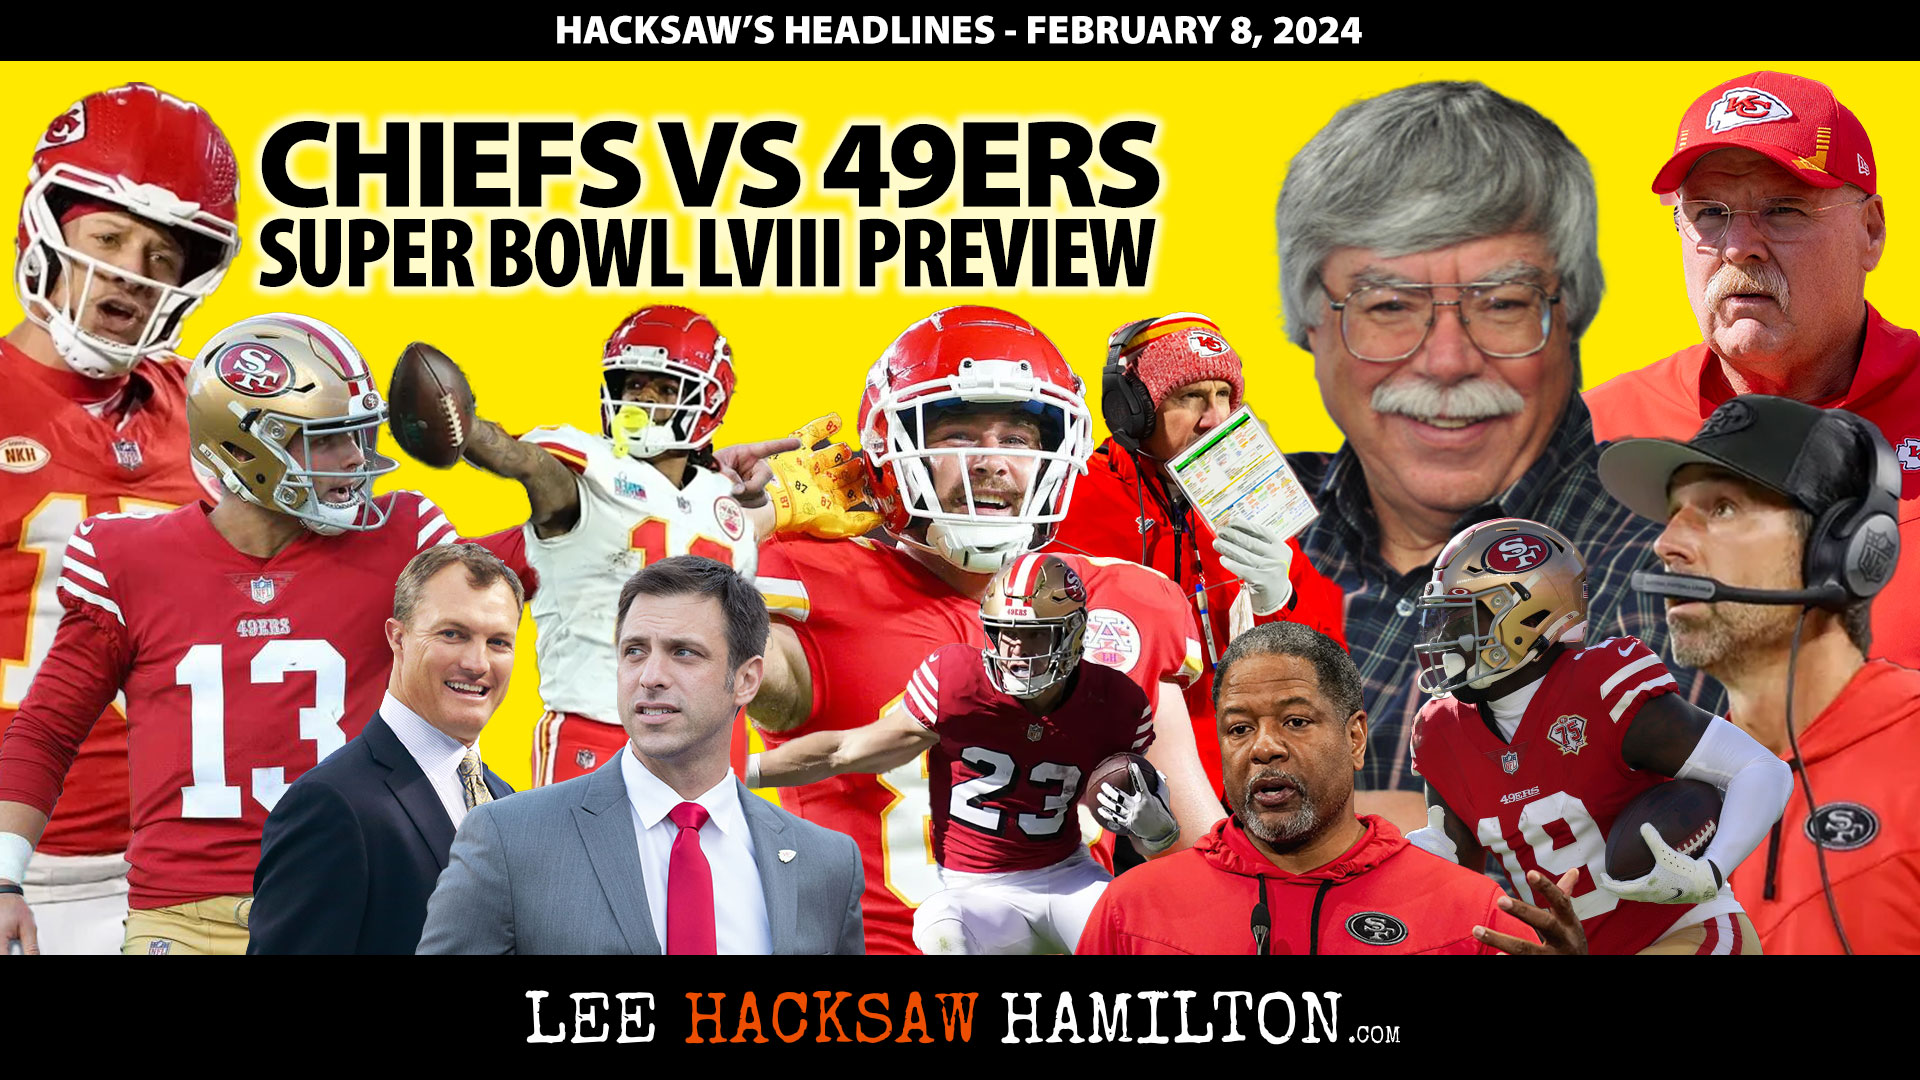 Lee Hacksaw Hamilton discusses Super Bowl LVIII Preview - Chiefs vs 49ers, Mahomes vs Purdy, Reid vs Shanahan